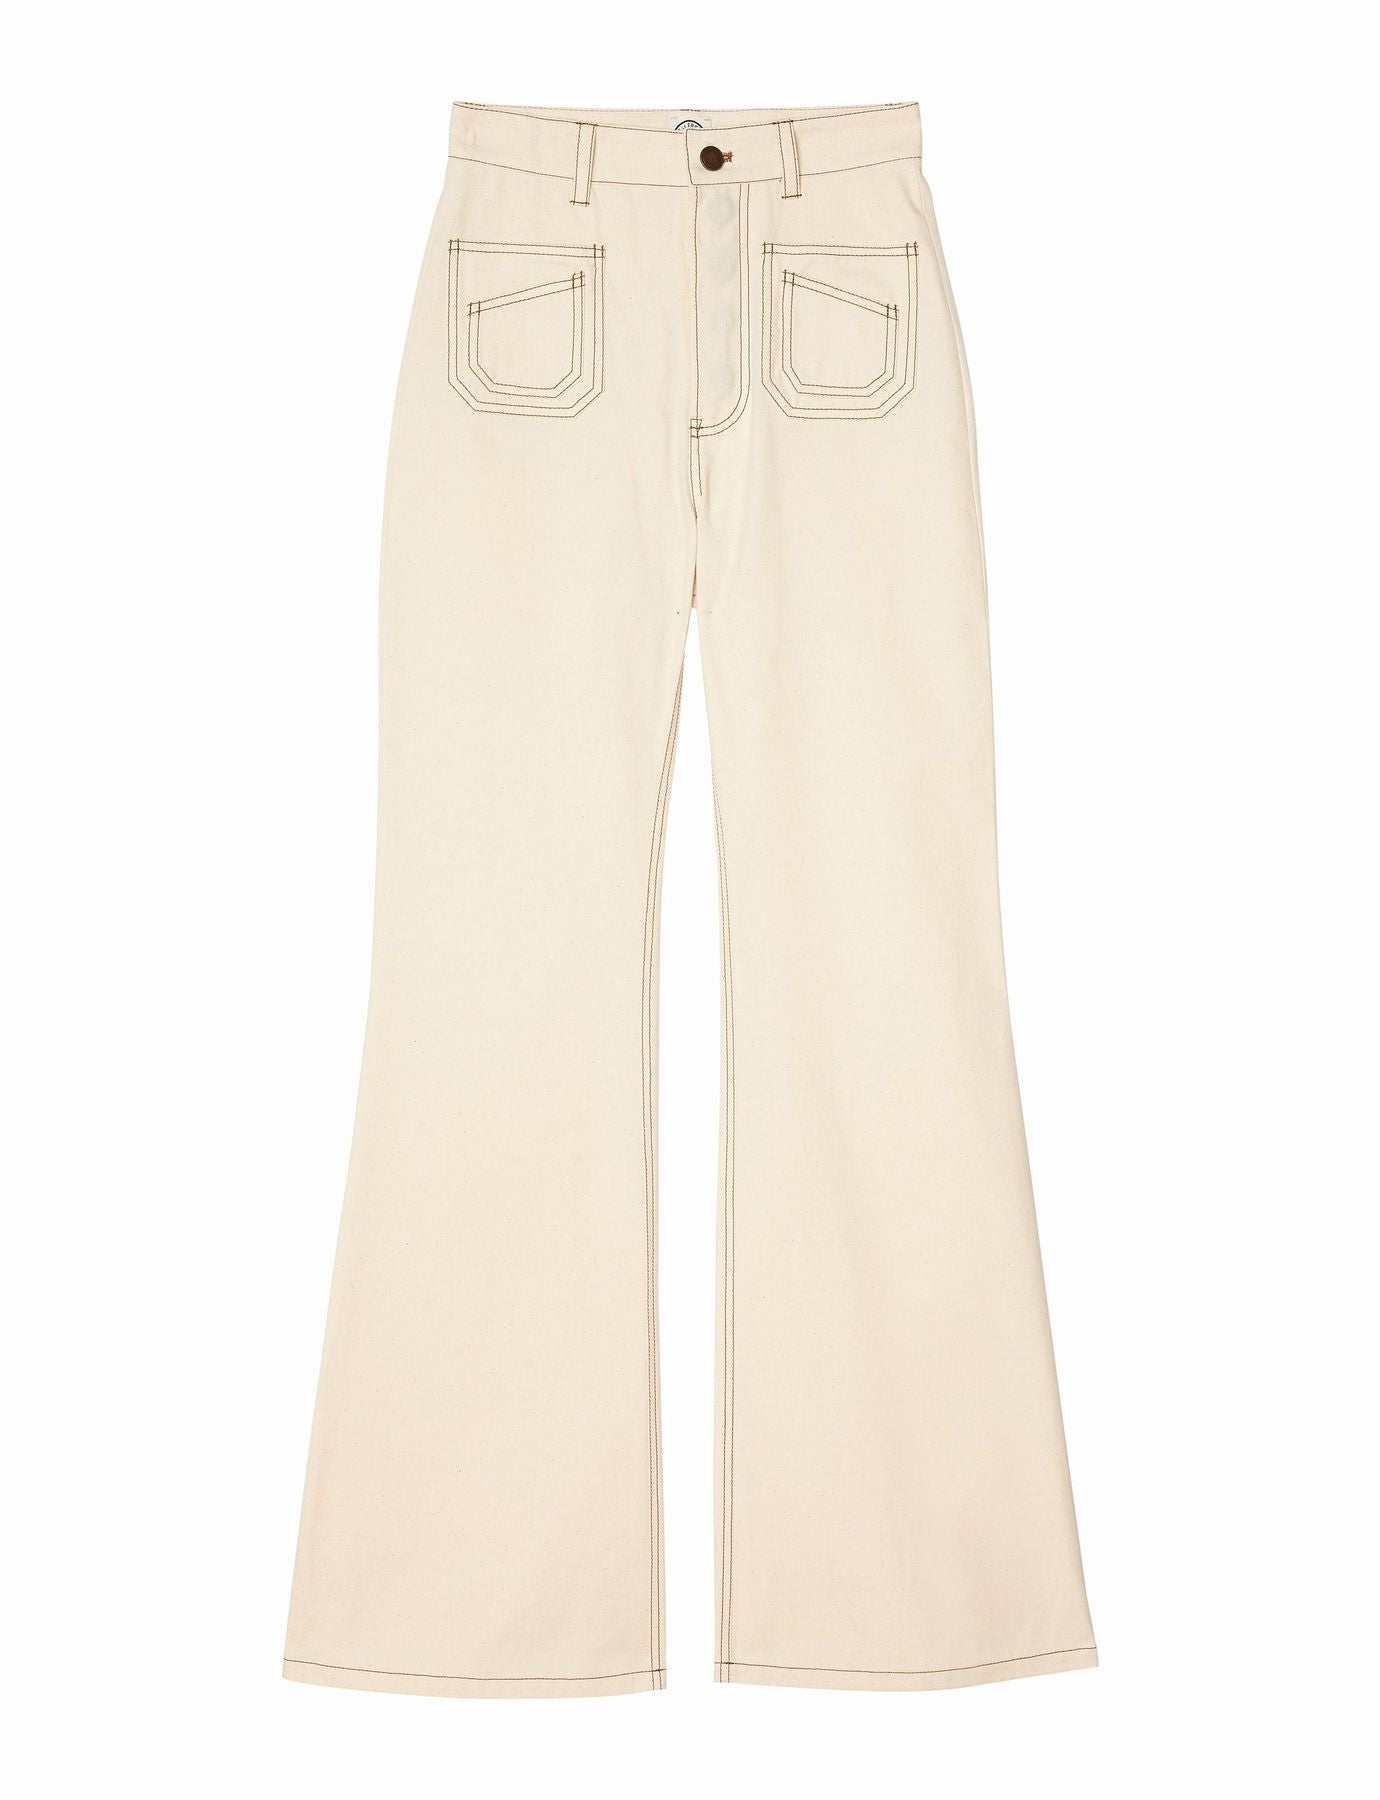 pantaloni-basilea-bianco-crema